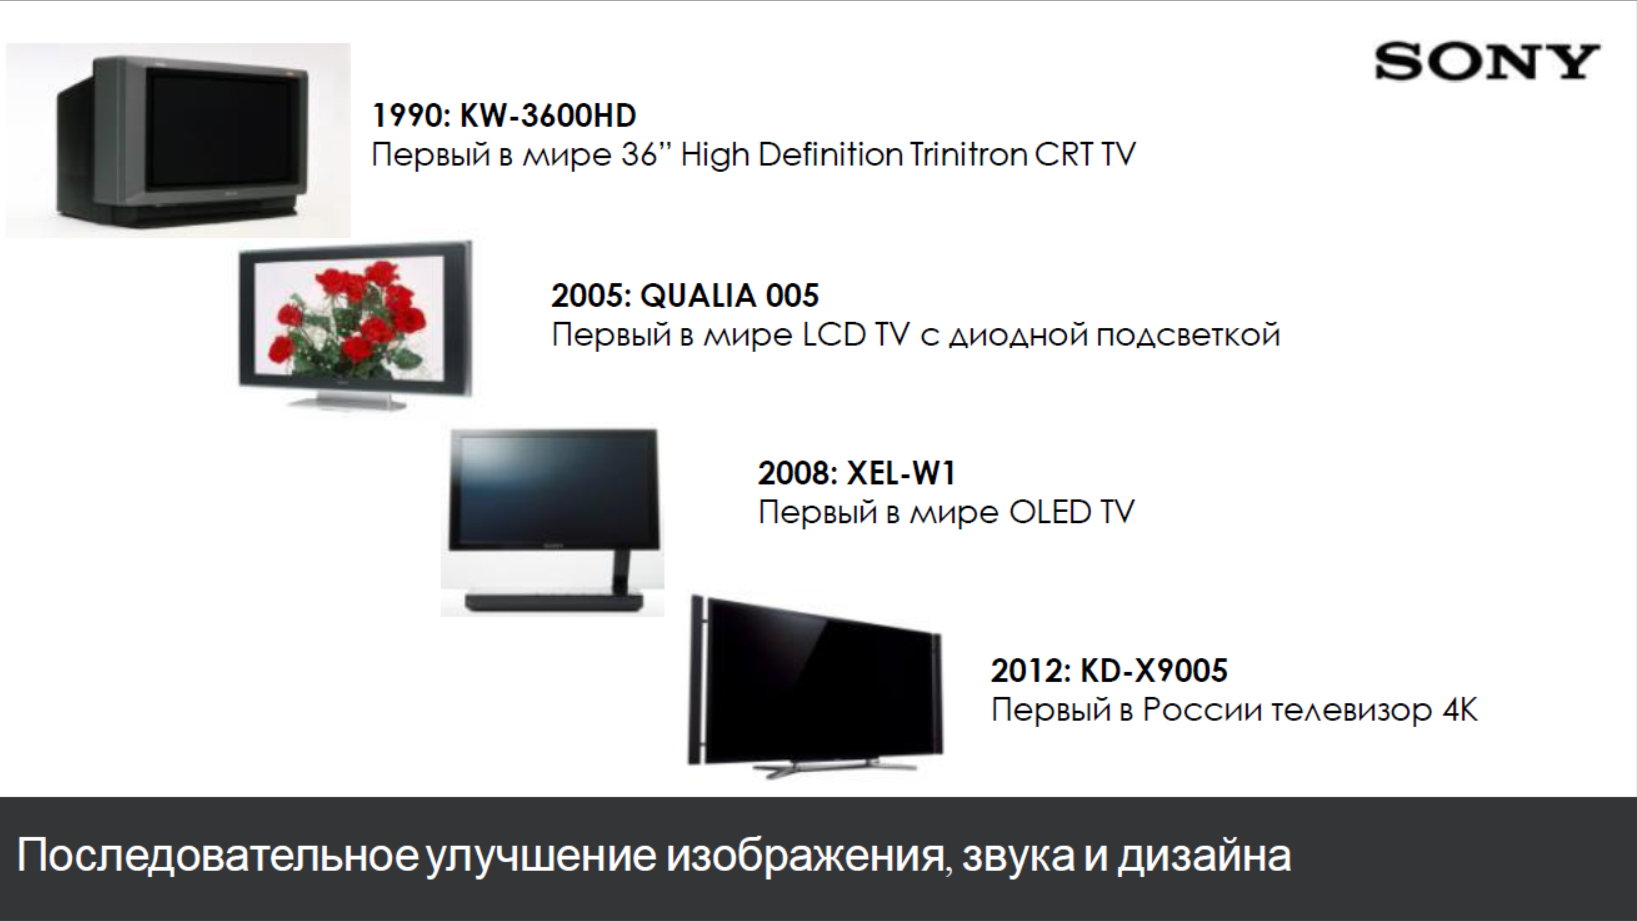 Ошибки телевизоров sony. Эволюция телевизоров. Эволюция телевизоров Sony. Эволюция телевизоров по годам. Эволюция телевизоров в картинках по годам.